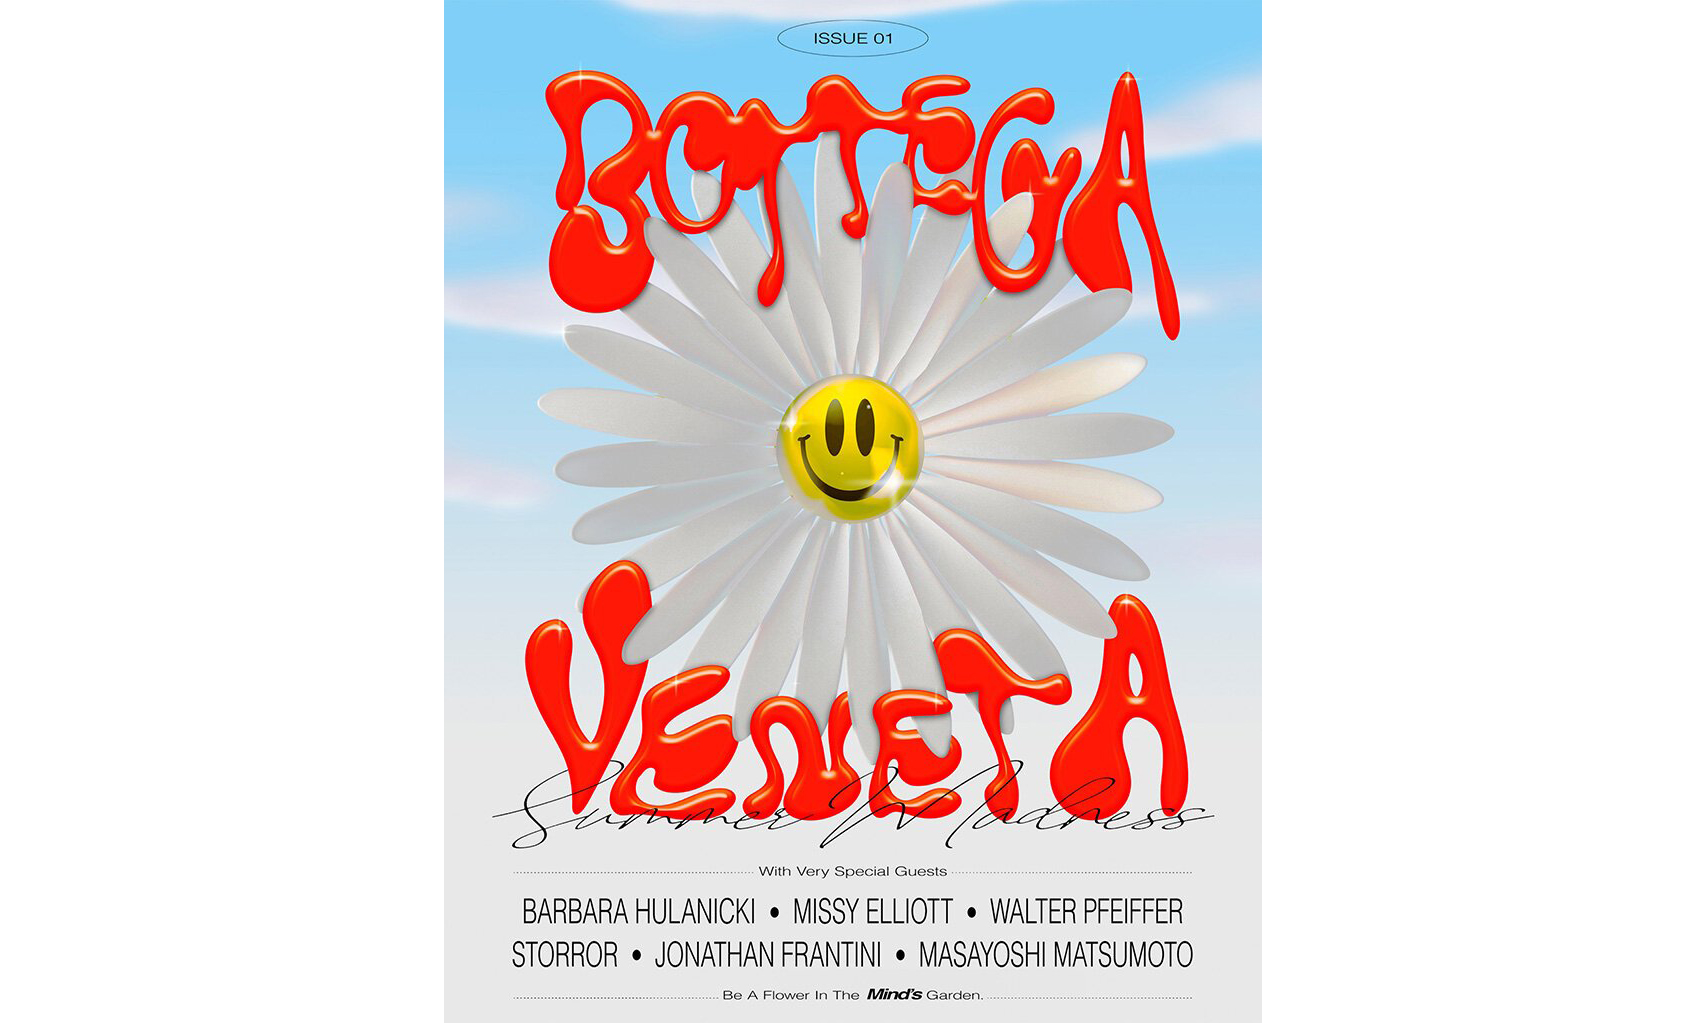 BOTTEGA VENETA 发布首本数字化季刊